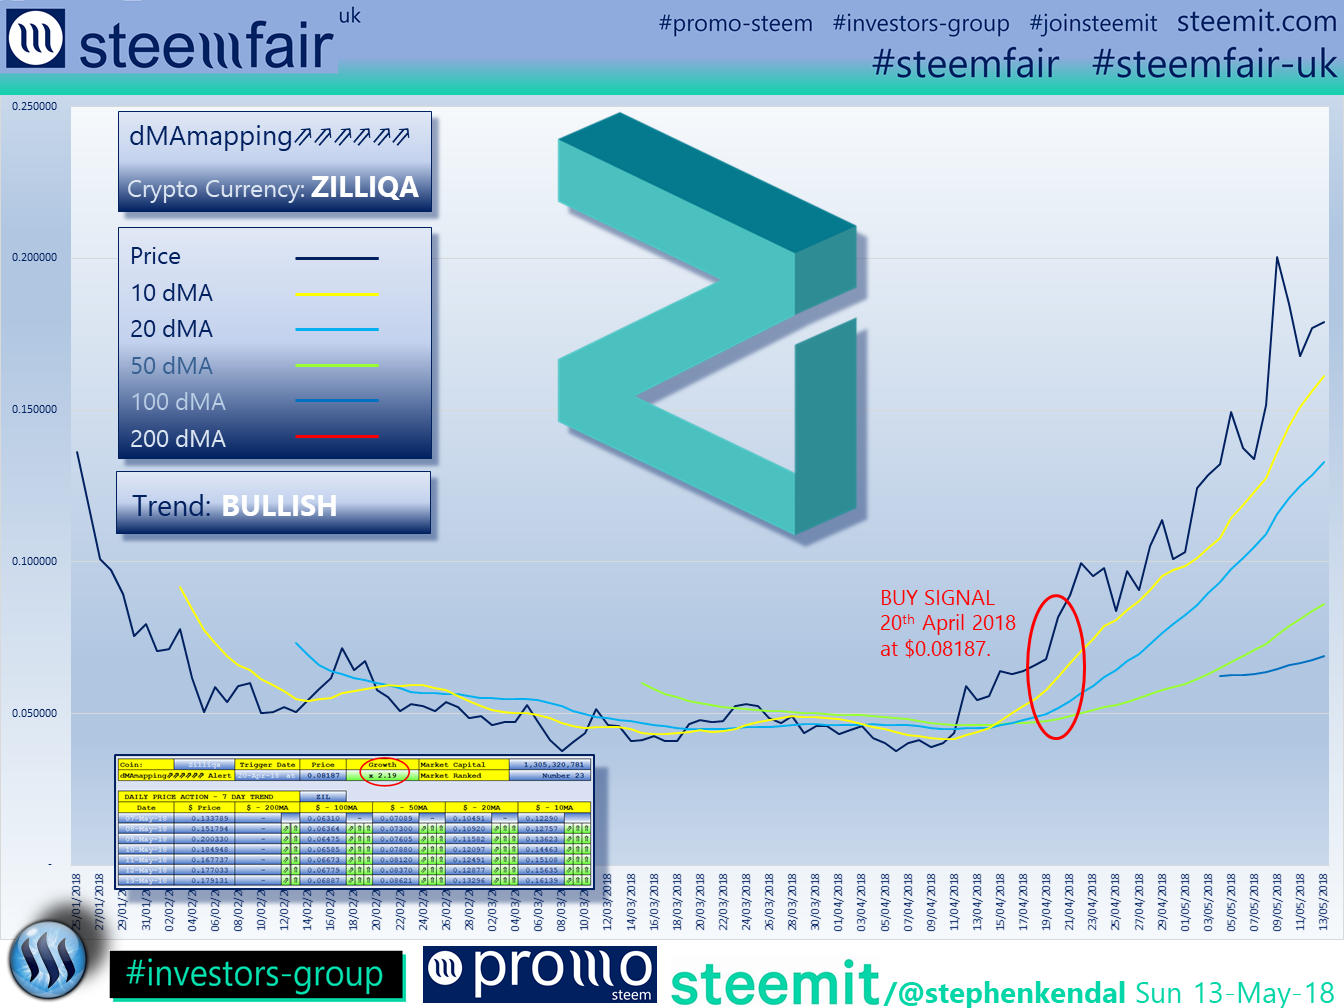 SteemFair SteemFair-uk Promo-Steem Investors-Group Zilliqa